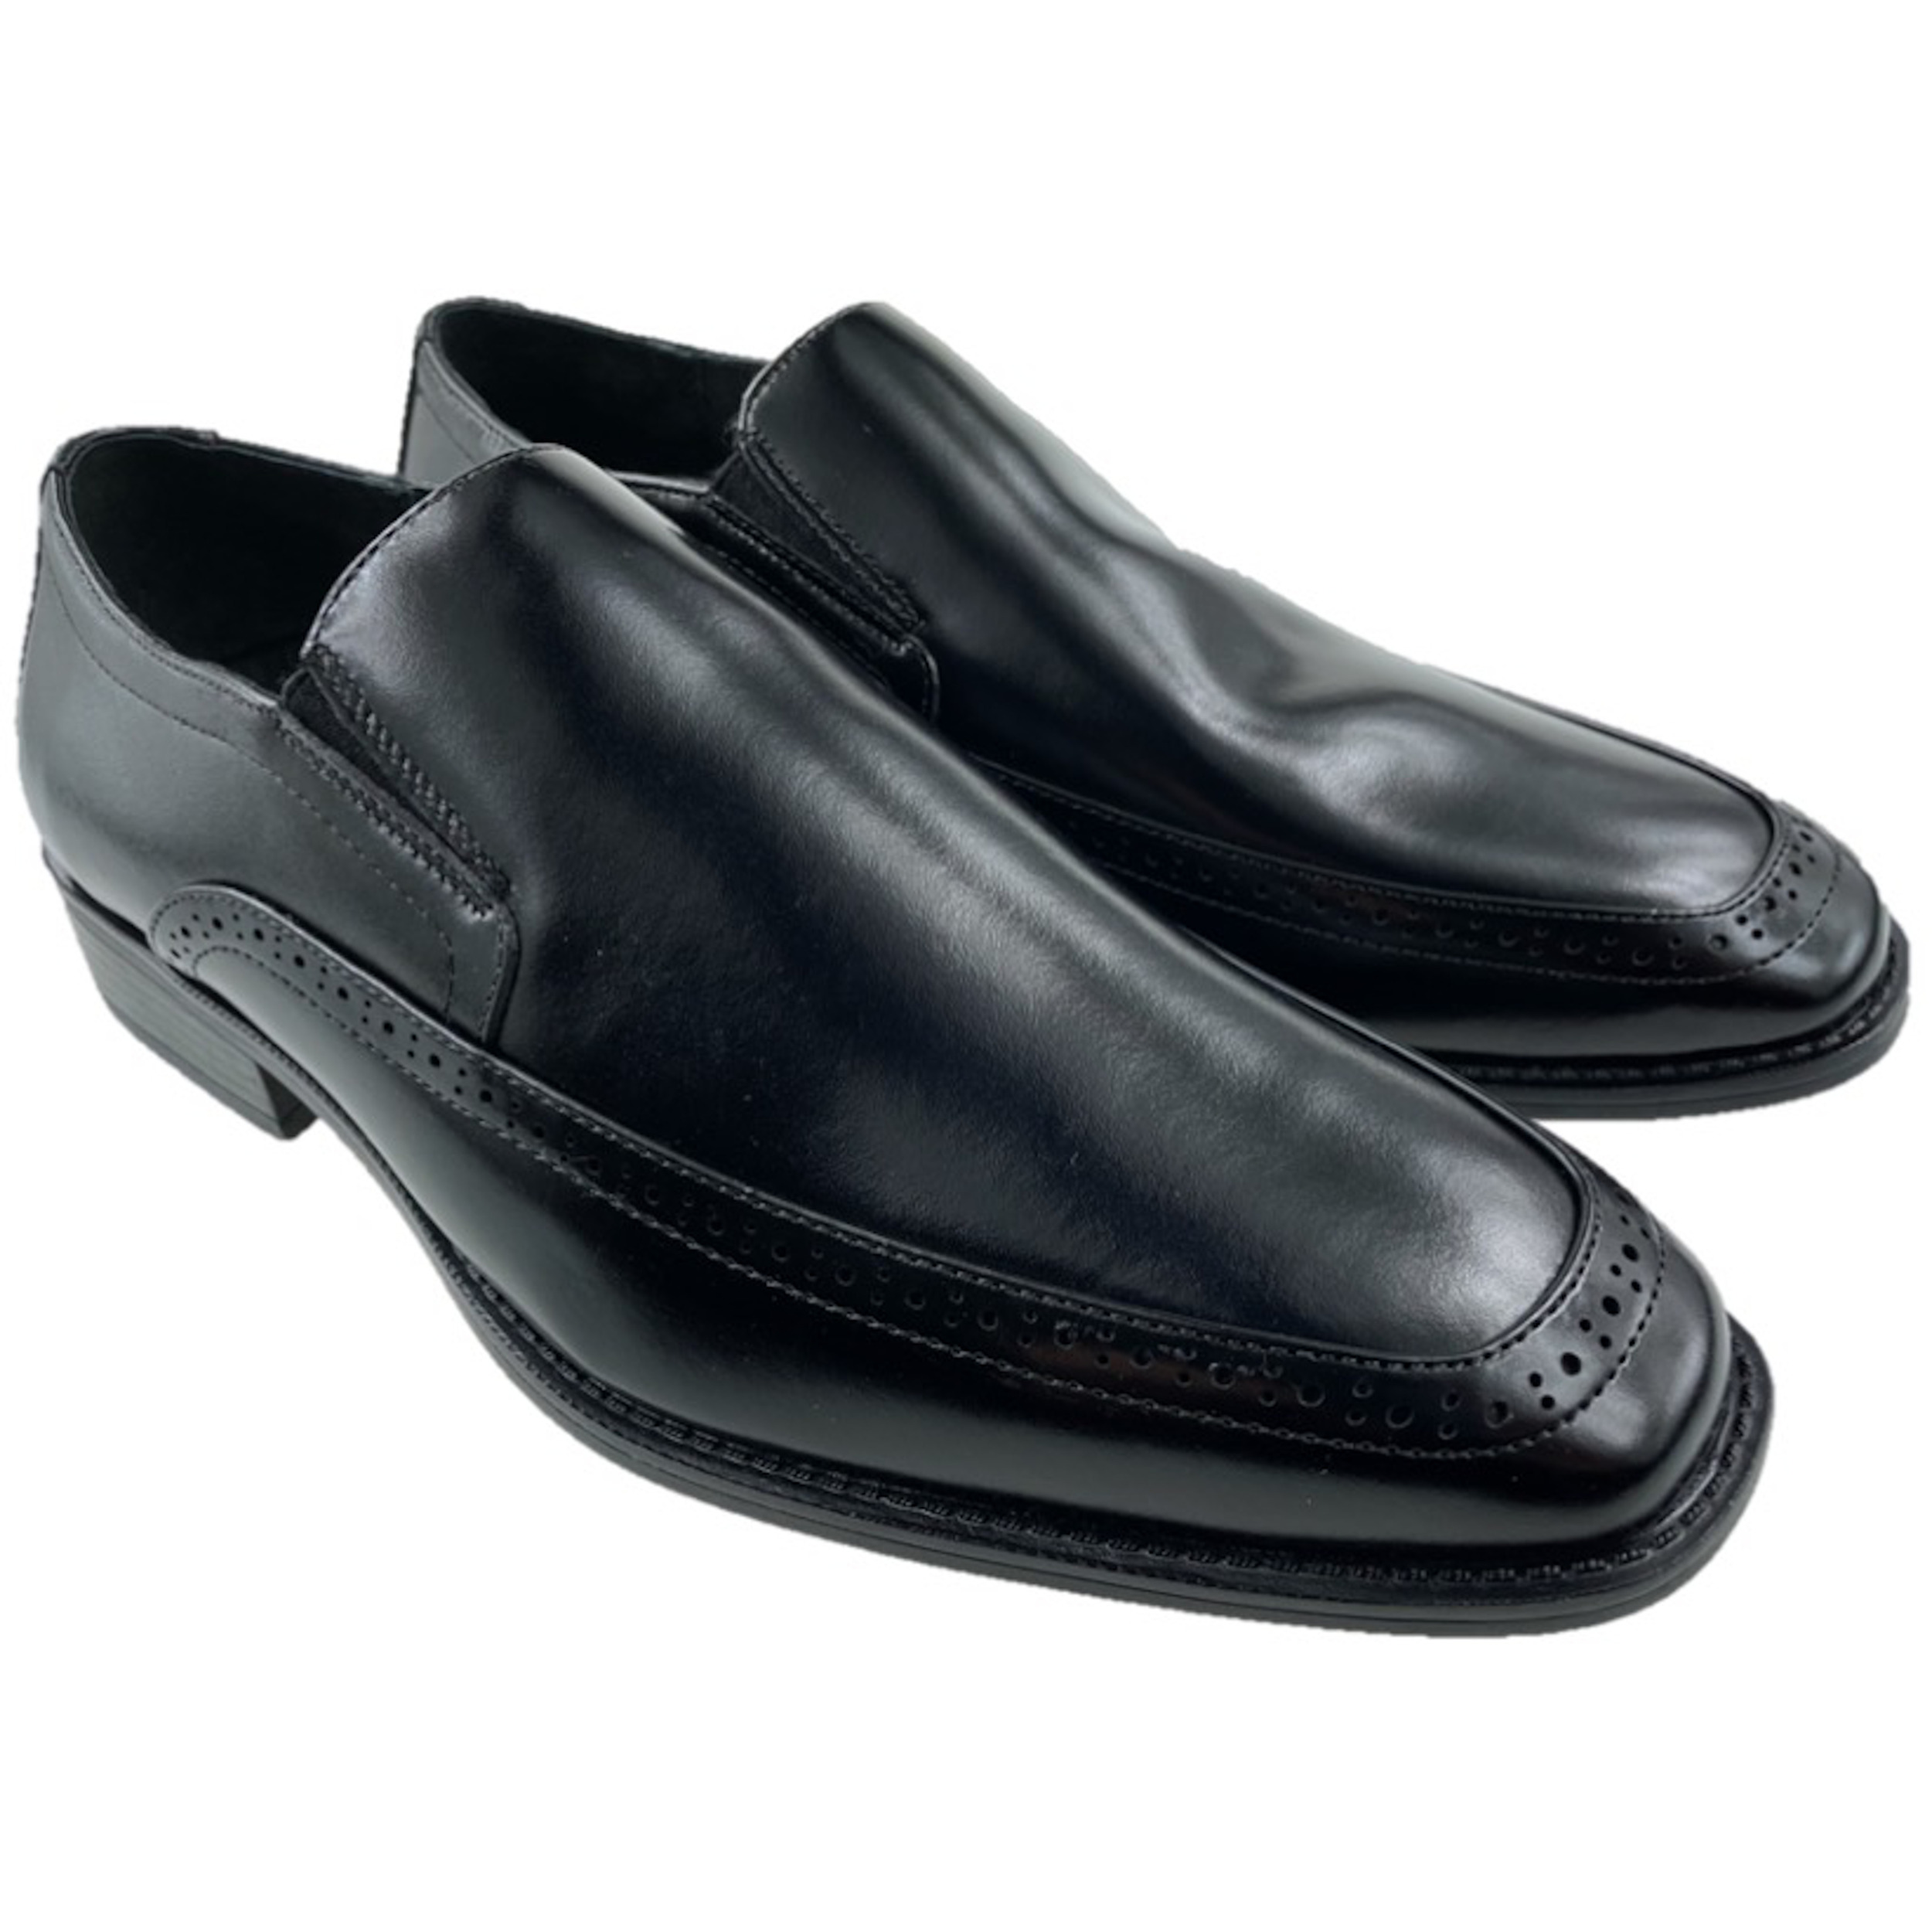 Stacey Adams Mens Leather Upper Oxford Shoe UK 8-12 mcfootwearltd